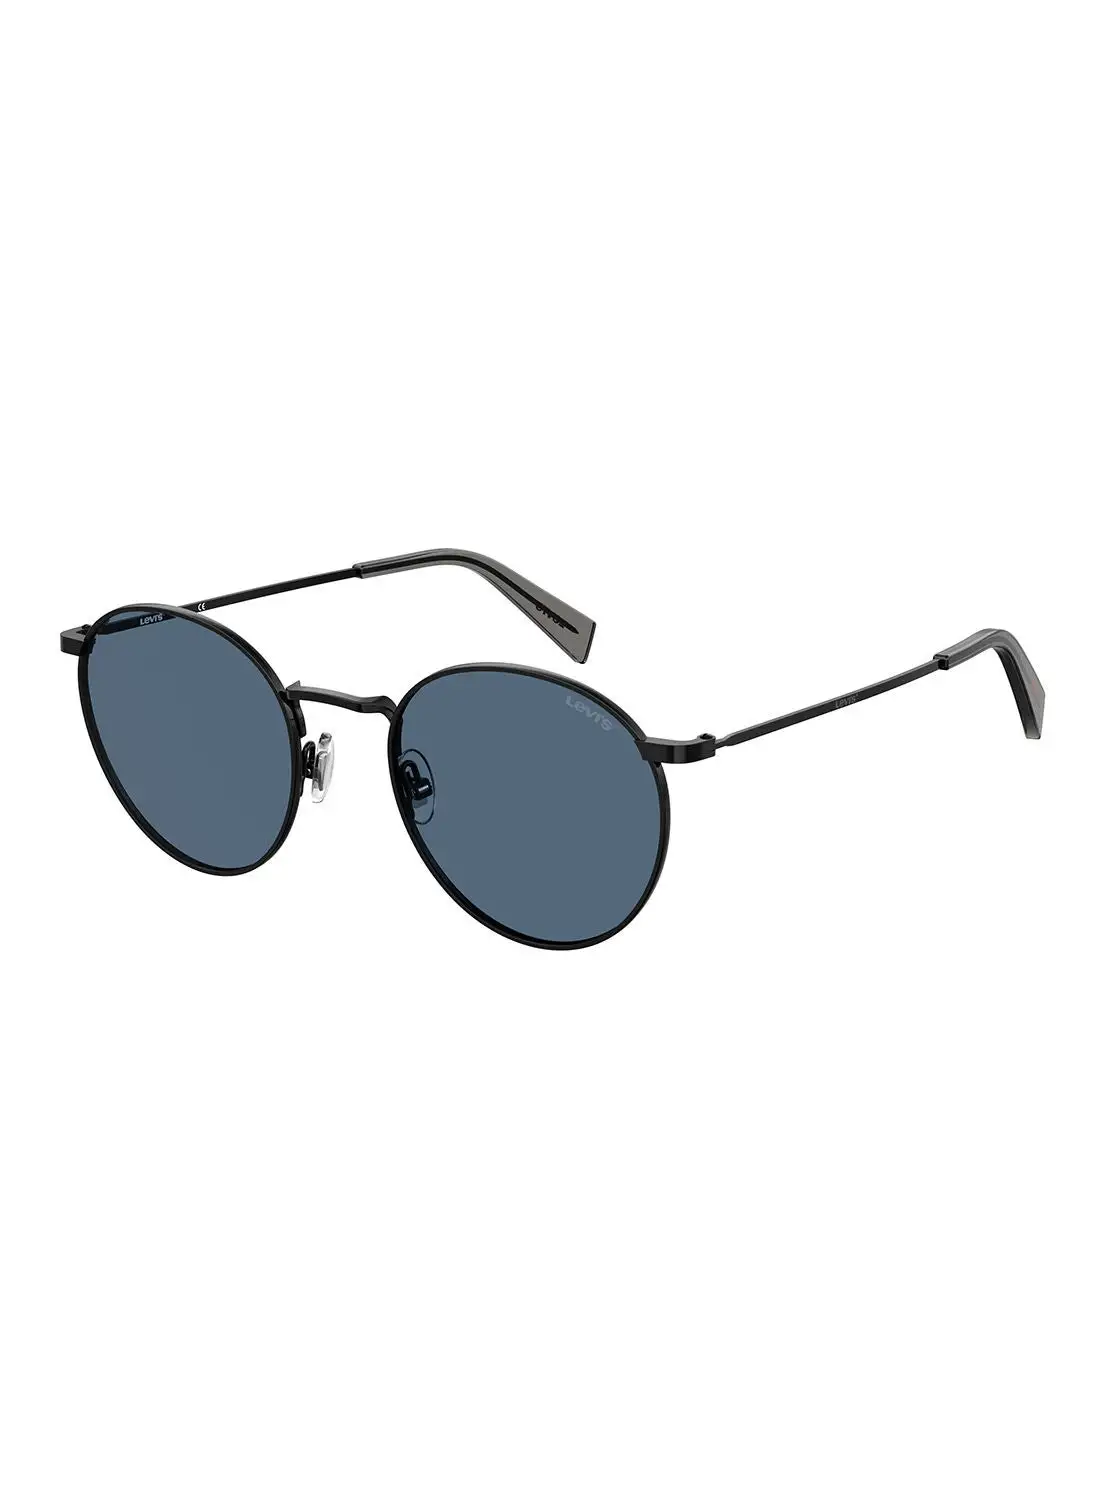 Levi's Unisex UV Protection Round Sunglasses - Lv 1005/S Blackgrey 52 - Lens Size: 52 Mm